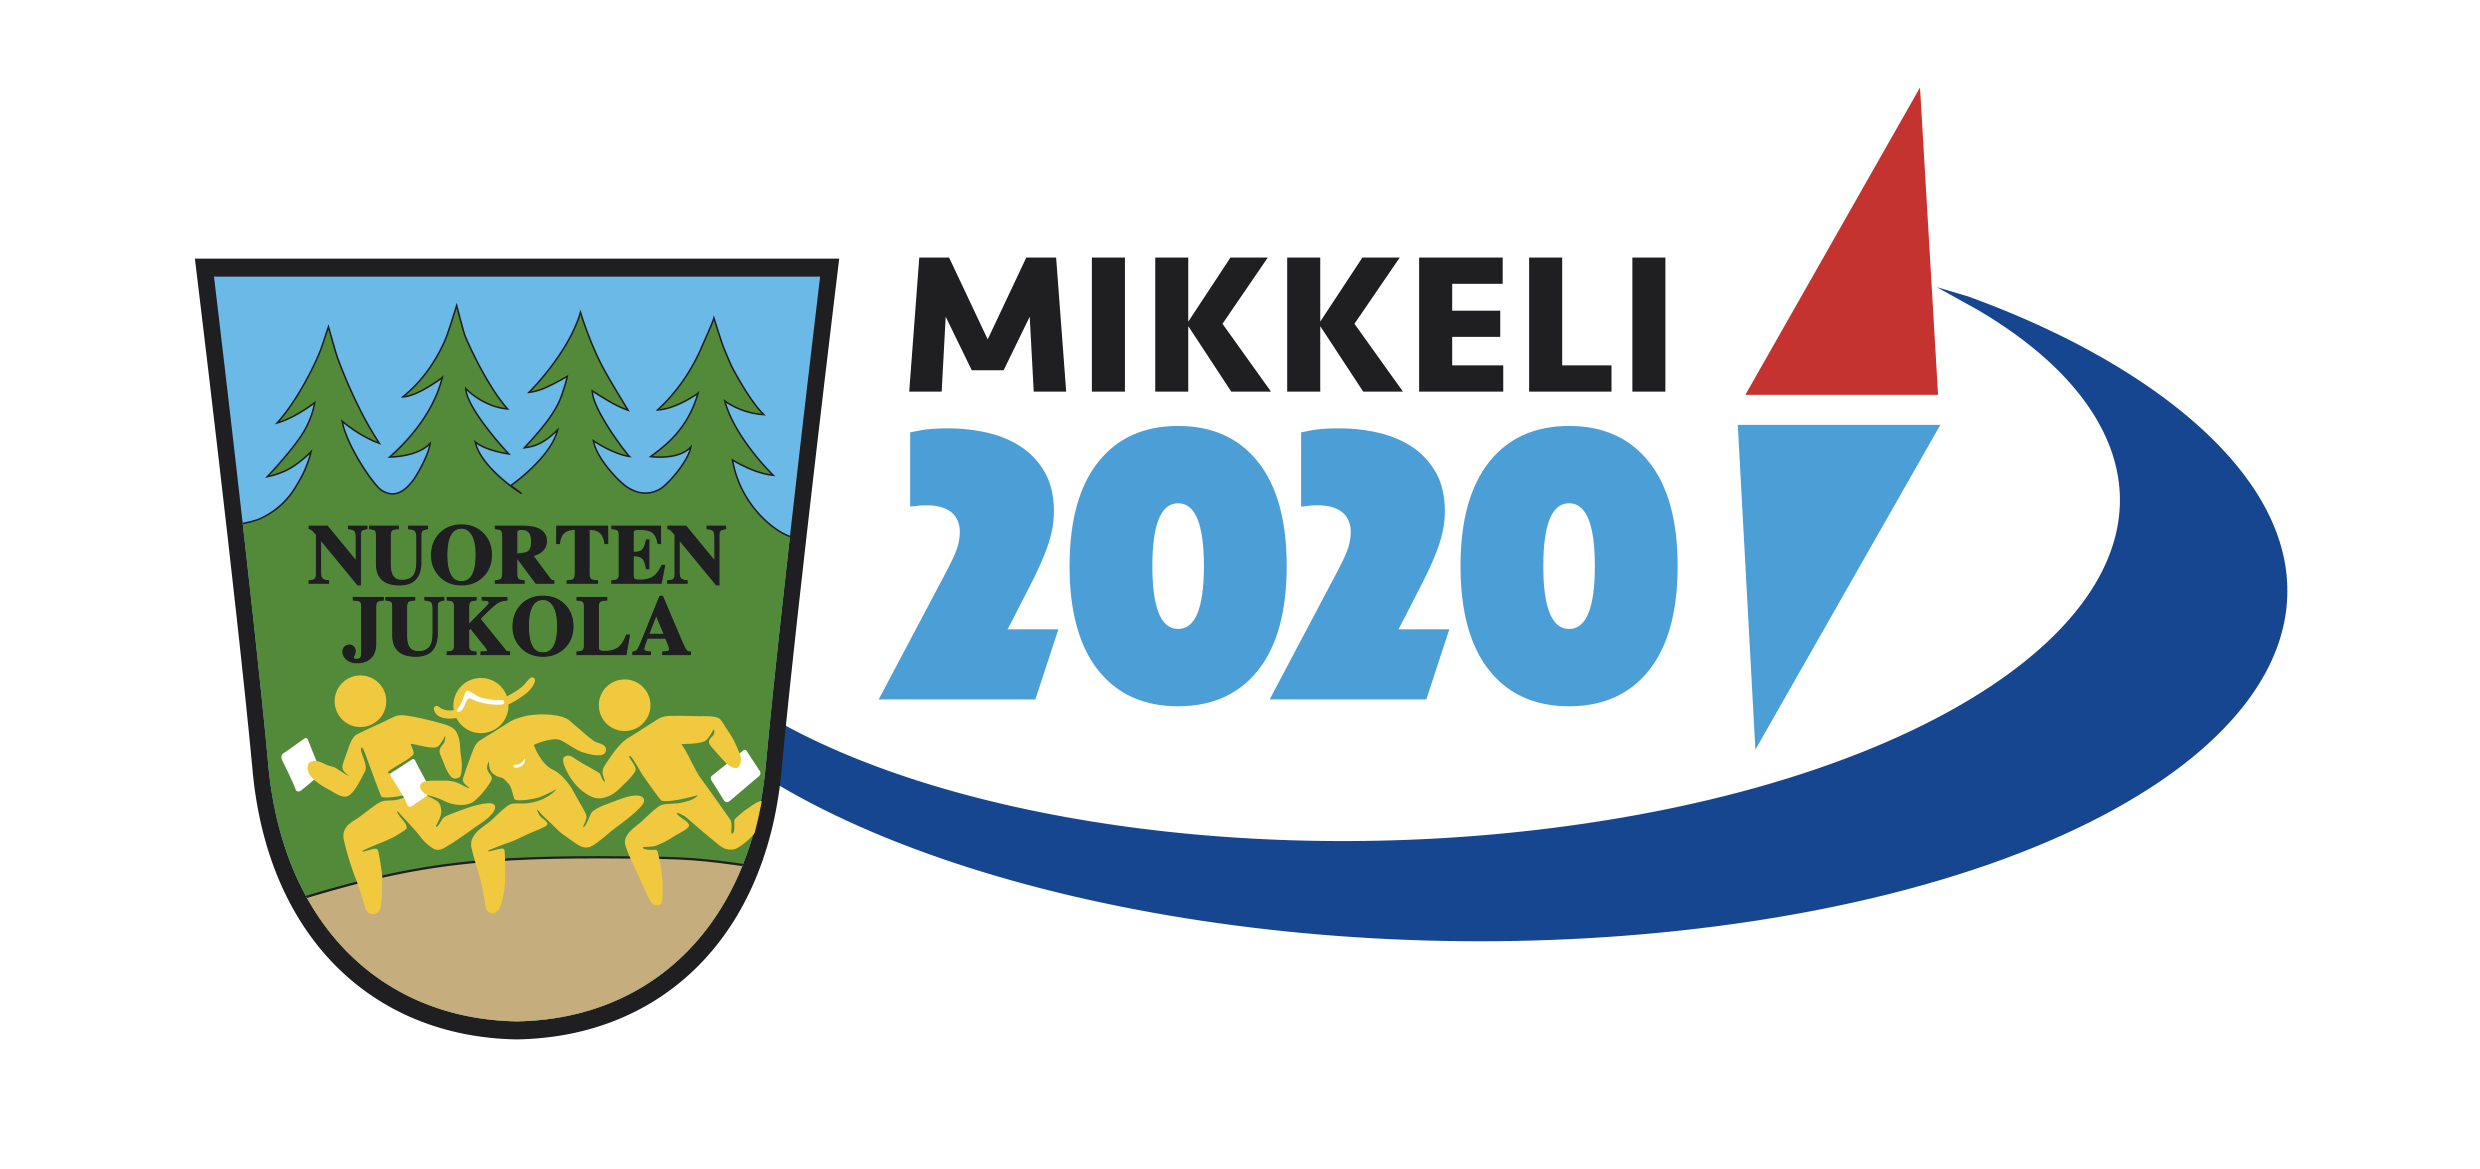 NUJU Mikkeli 2020 logo